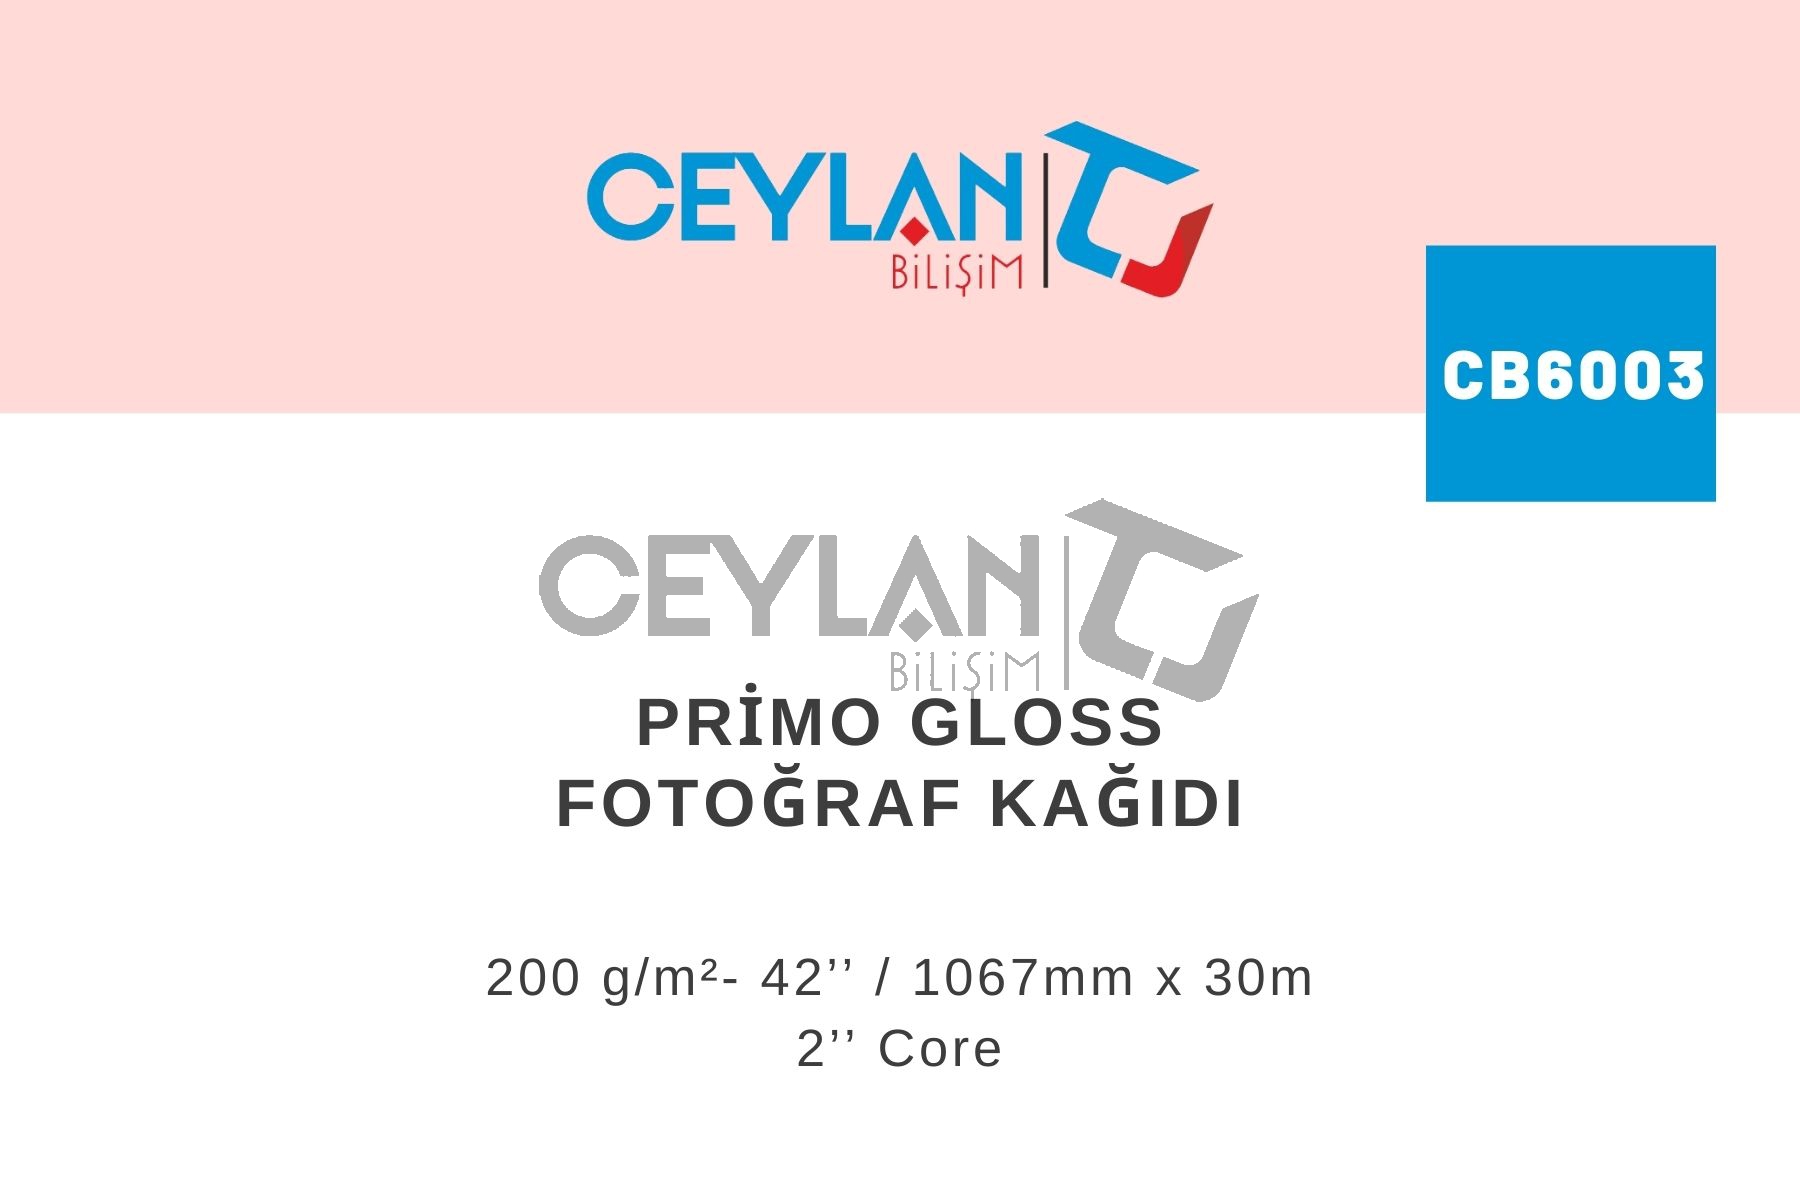 Primo Gloss Fotoğraf Kağıdı 200 g/m²- 42’’ / 1067mm x 30m 2’’ Core